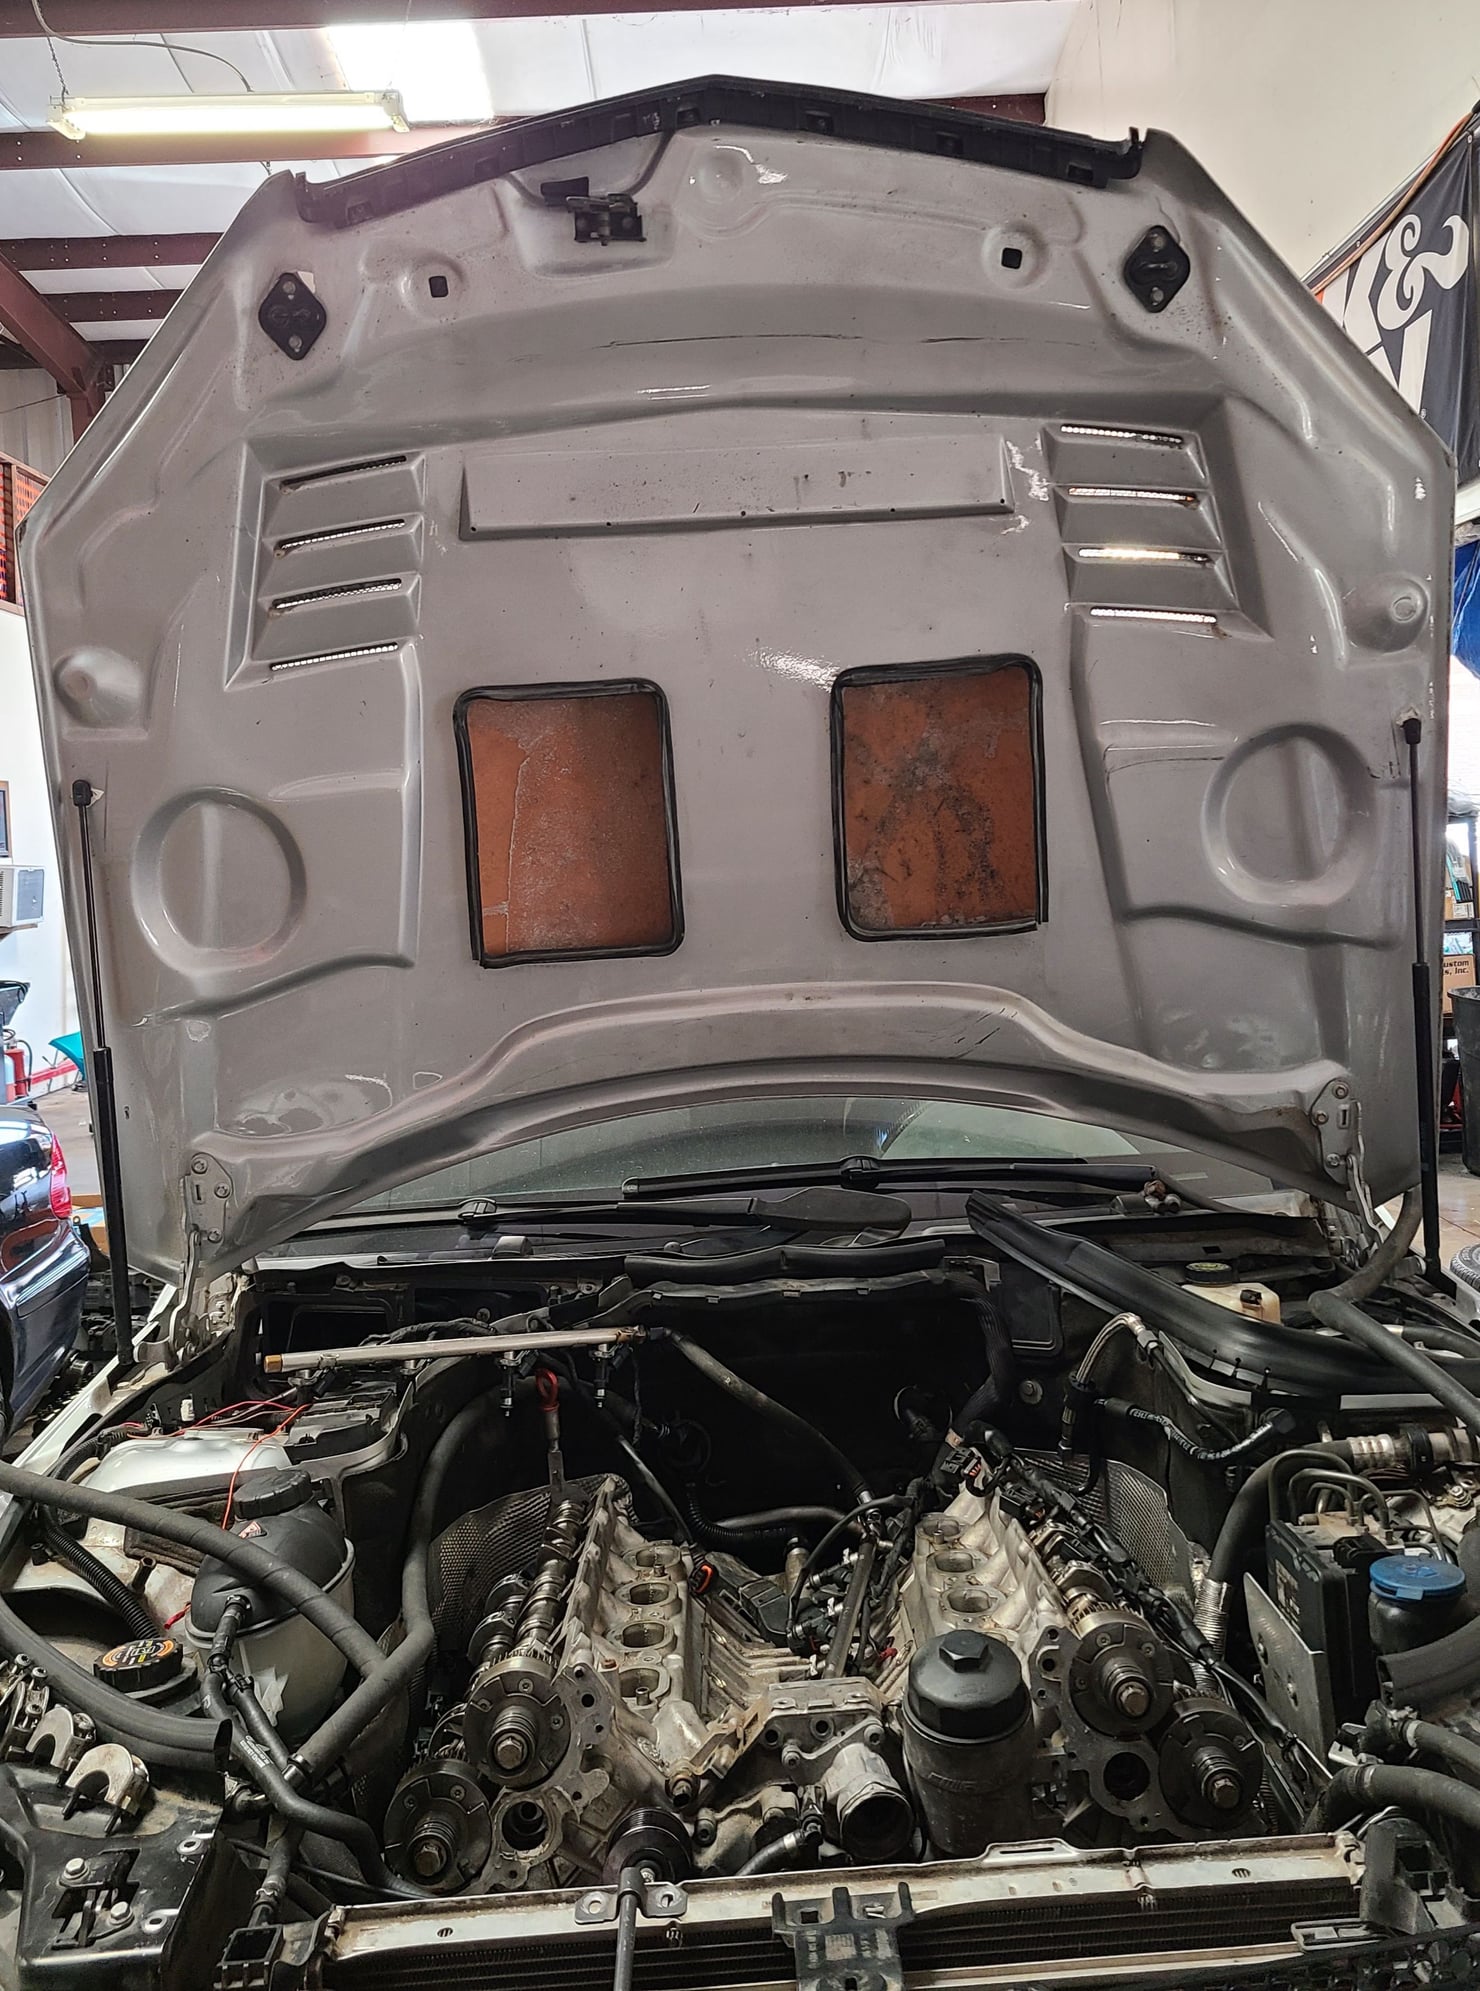 Exterior Body Parts - M156 Custom Carbon Fiber Hood - Used - 2009 to 2015 Mercedes-Benz C63 AMG - Katy, TX 77449, United States